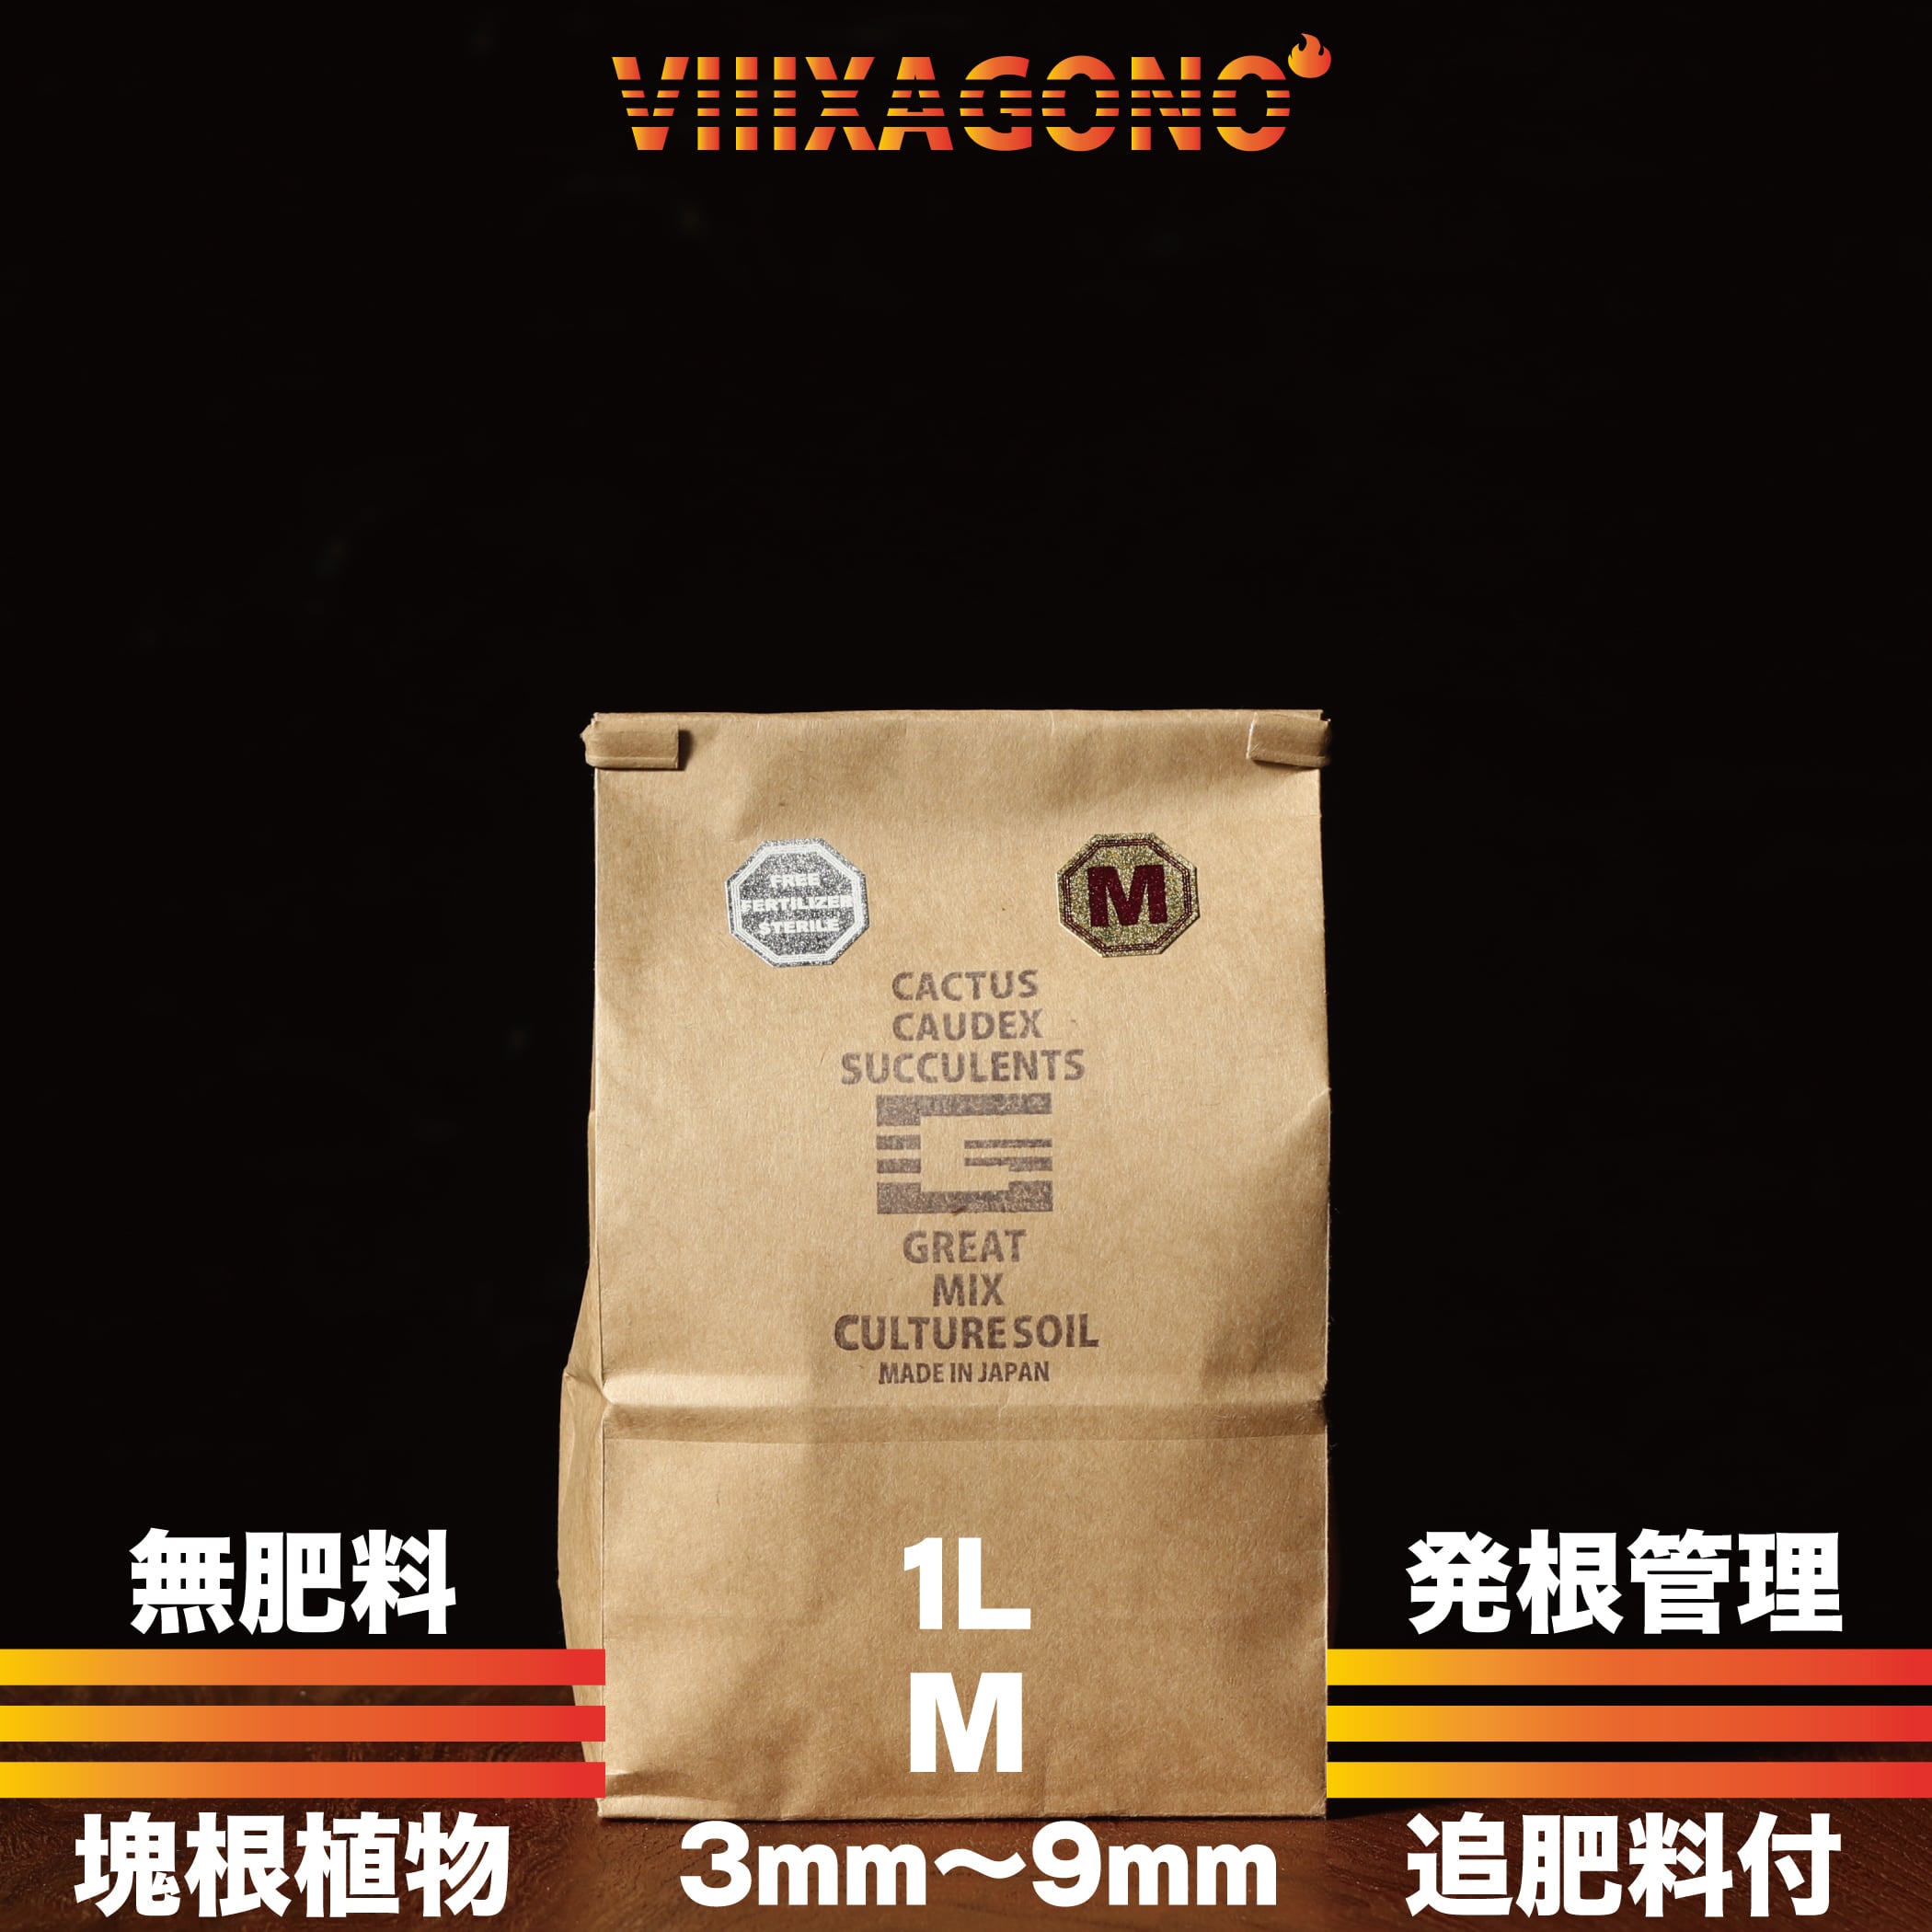 GREAT MIX CULTURE SOIL | VIIIXAGONO -エクサゴノ-サボテン用土-高級 ...